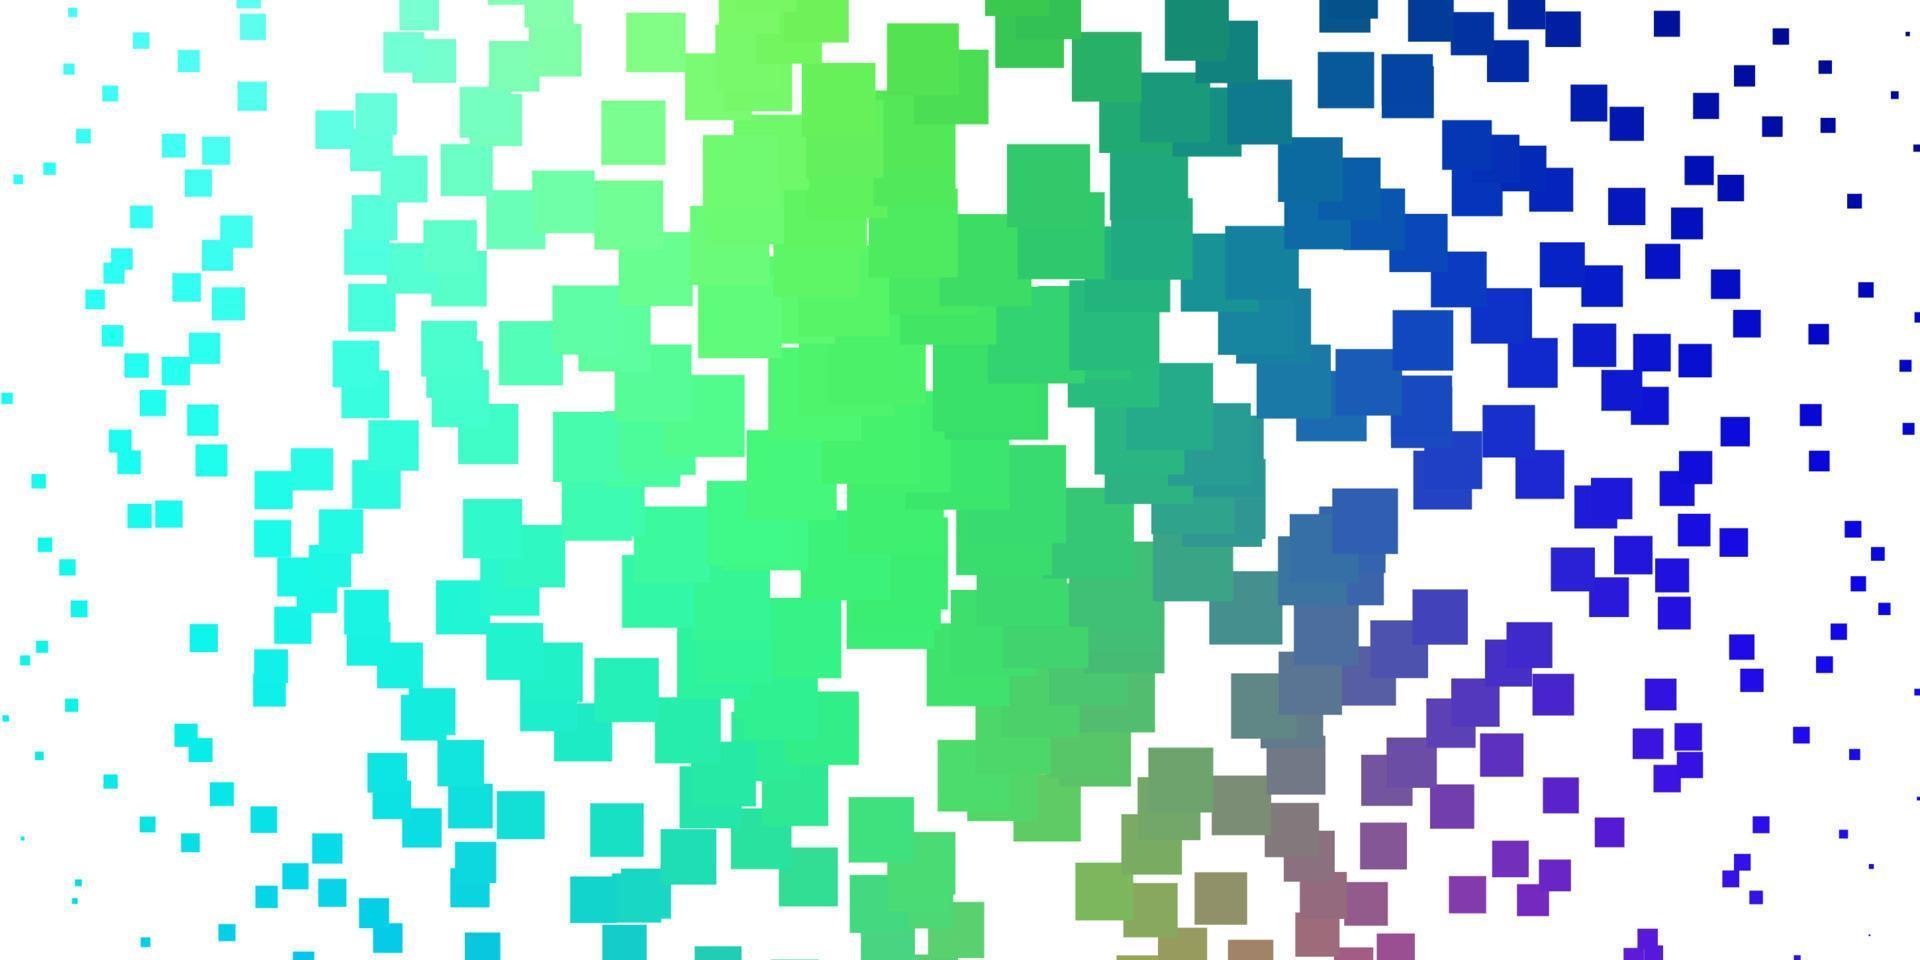 textura vector azul e verde claro em estilo retangular.